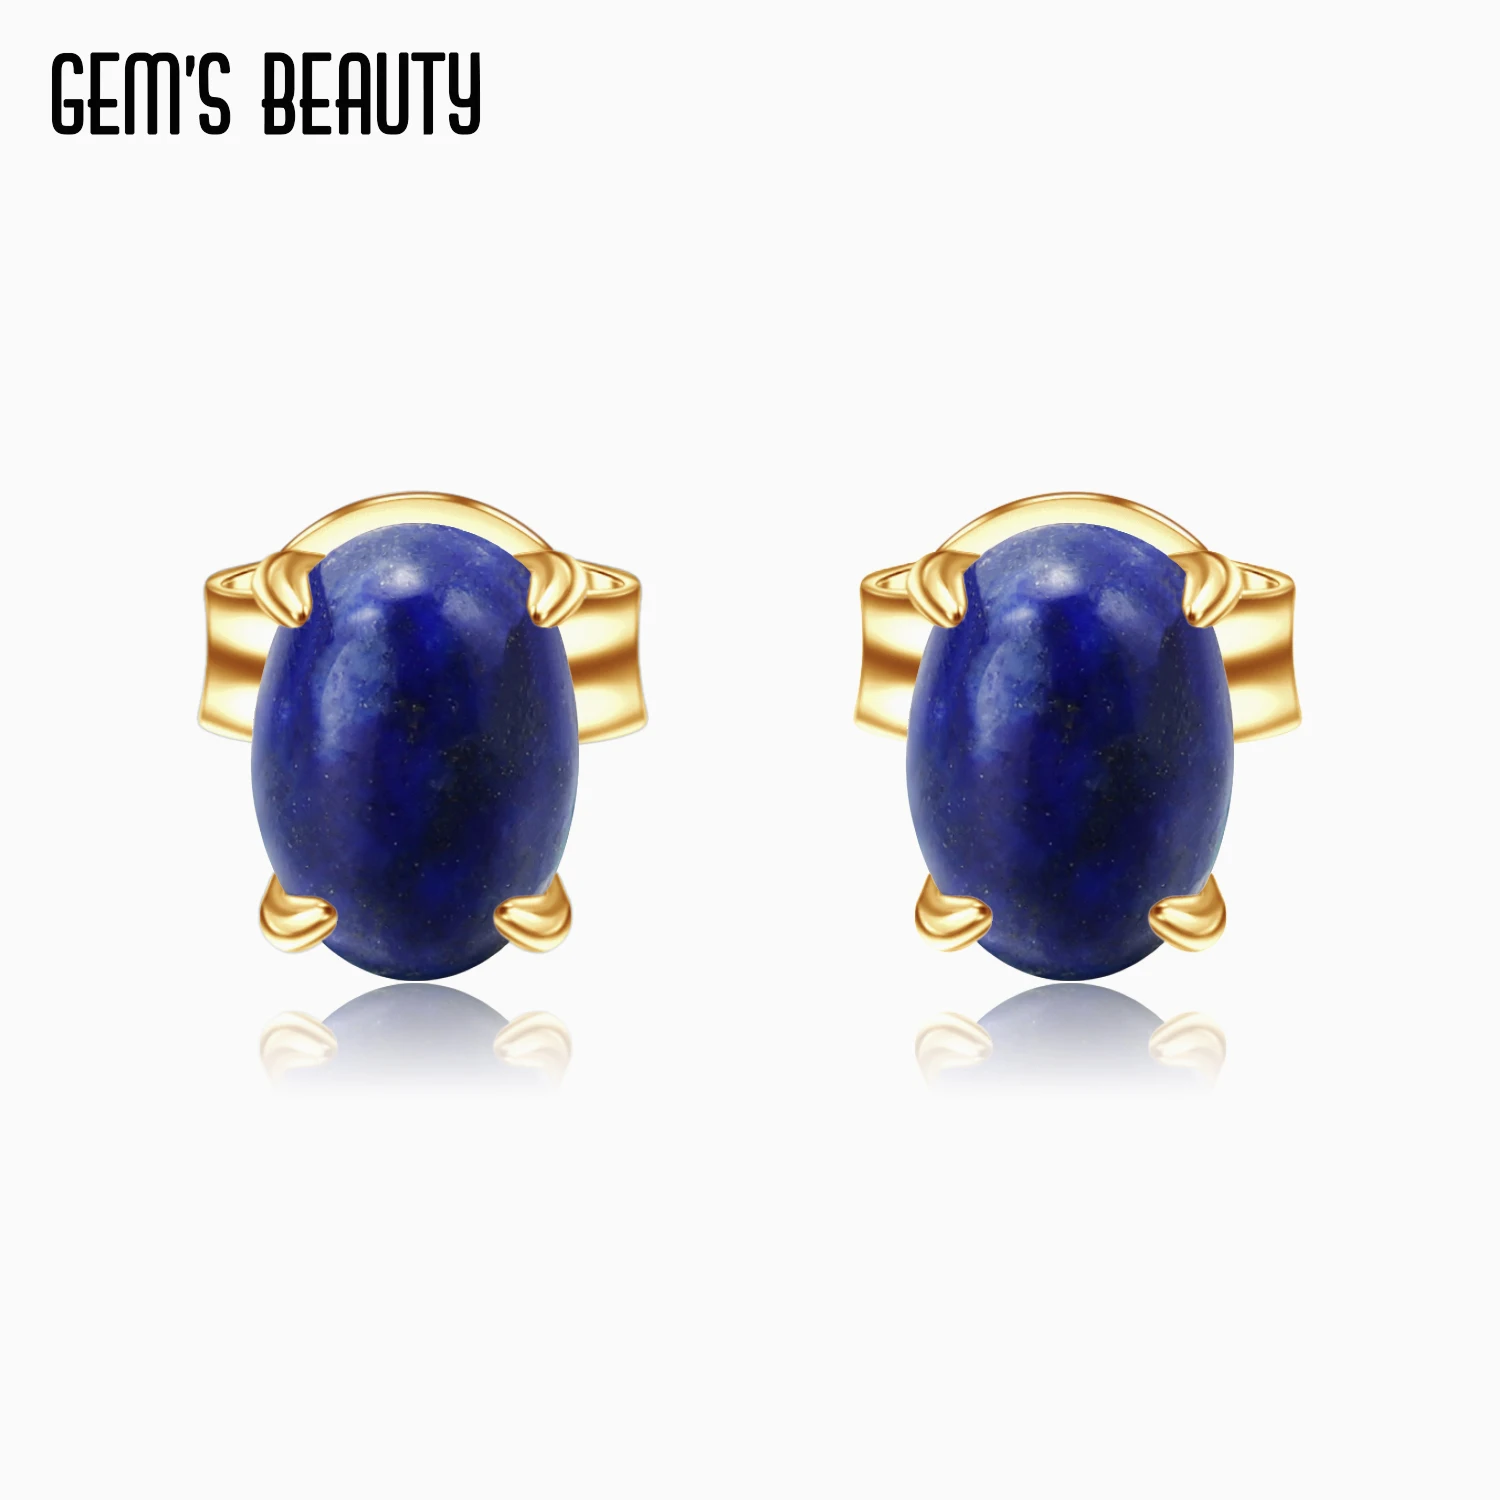 

GEM'S BEAUTY 925 Sterling Silver 18K Gold Filled Studs Earring Natural Oval Lapis Lazuli Handmade Earring For Women Gift